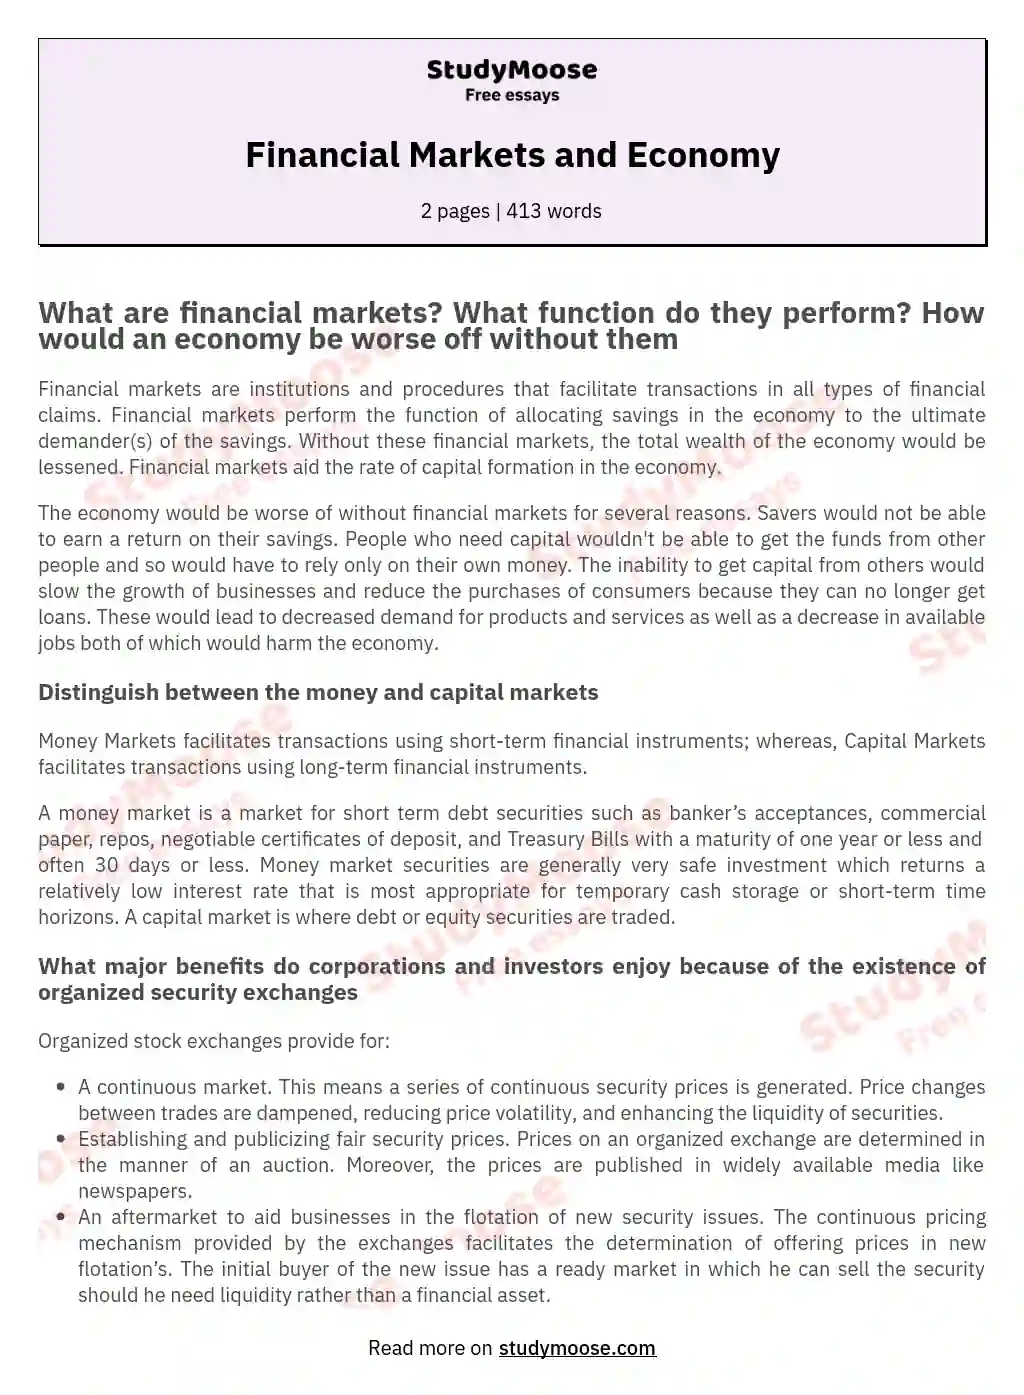 Financial Markets and Economy essay